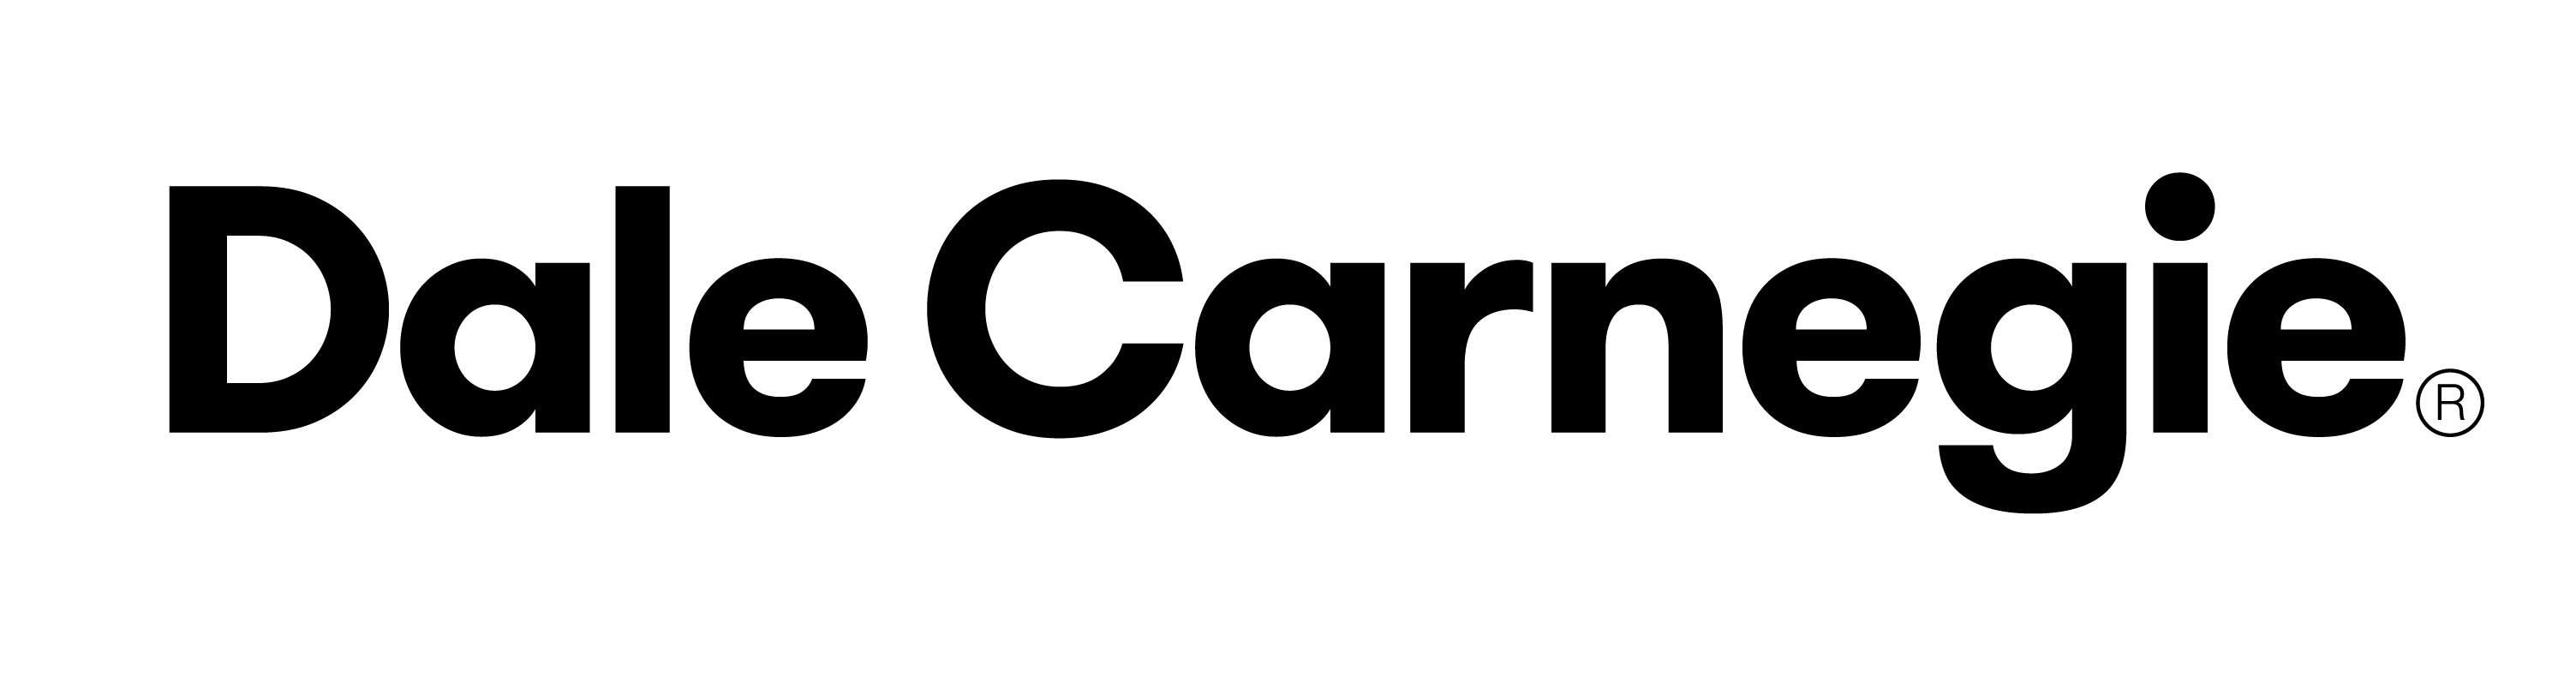 Dale Carnegie logo